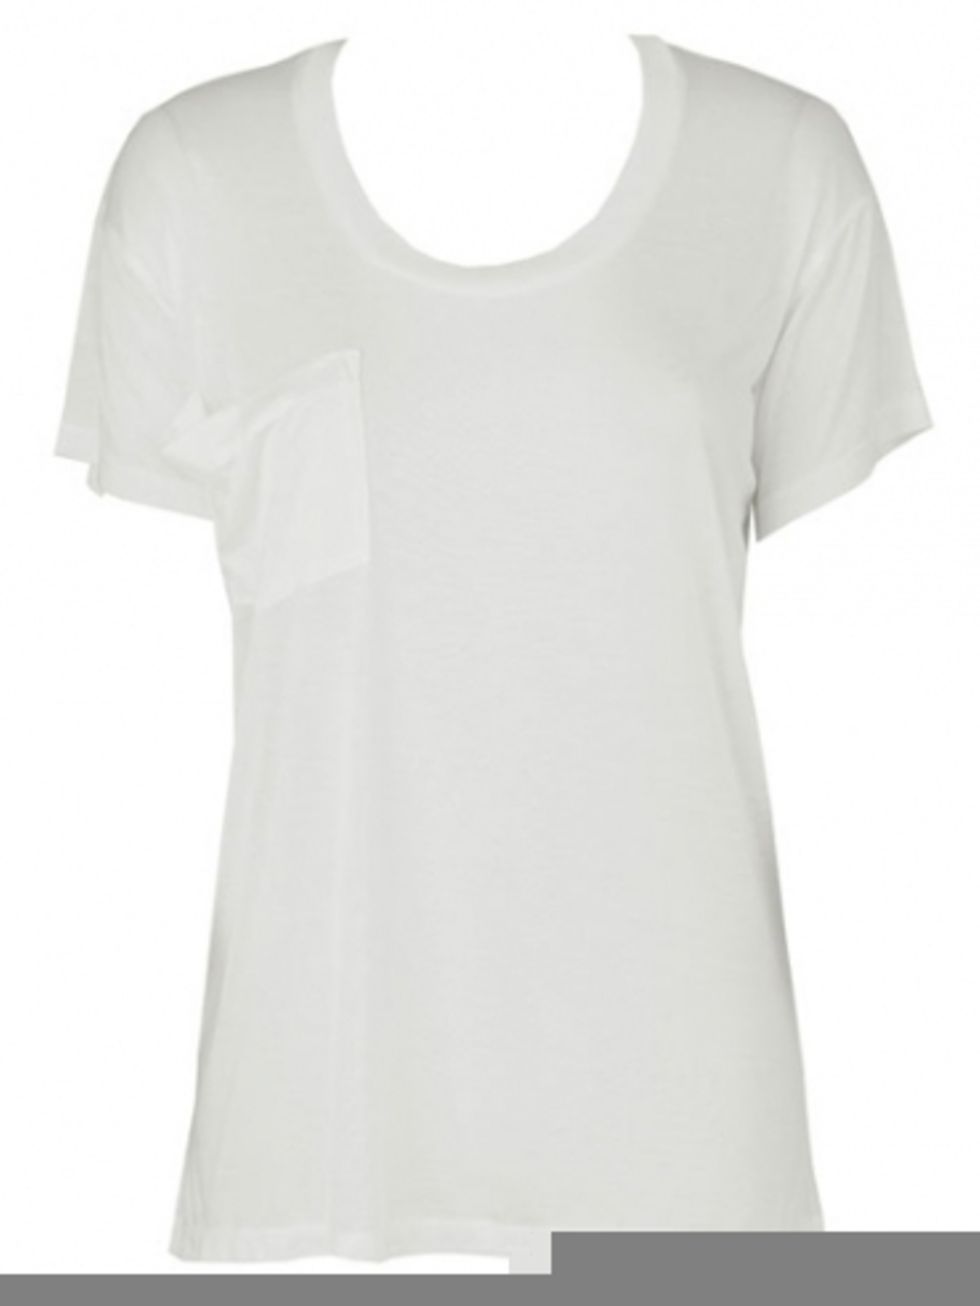 Product, Sleeve, Shoulder, White, Grey, Active shirt, 